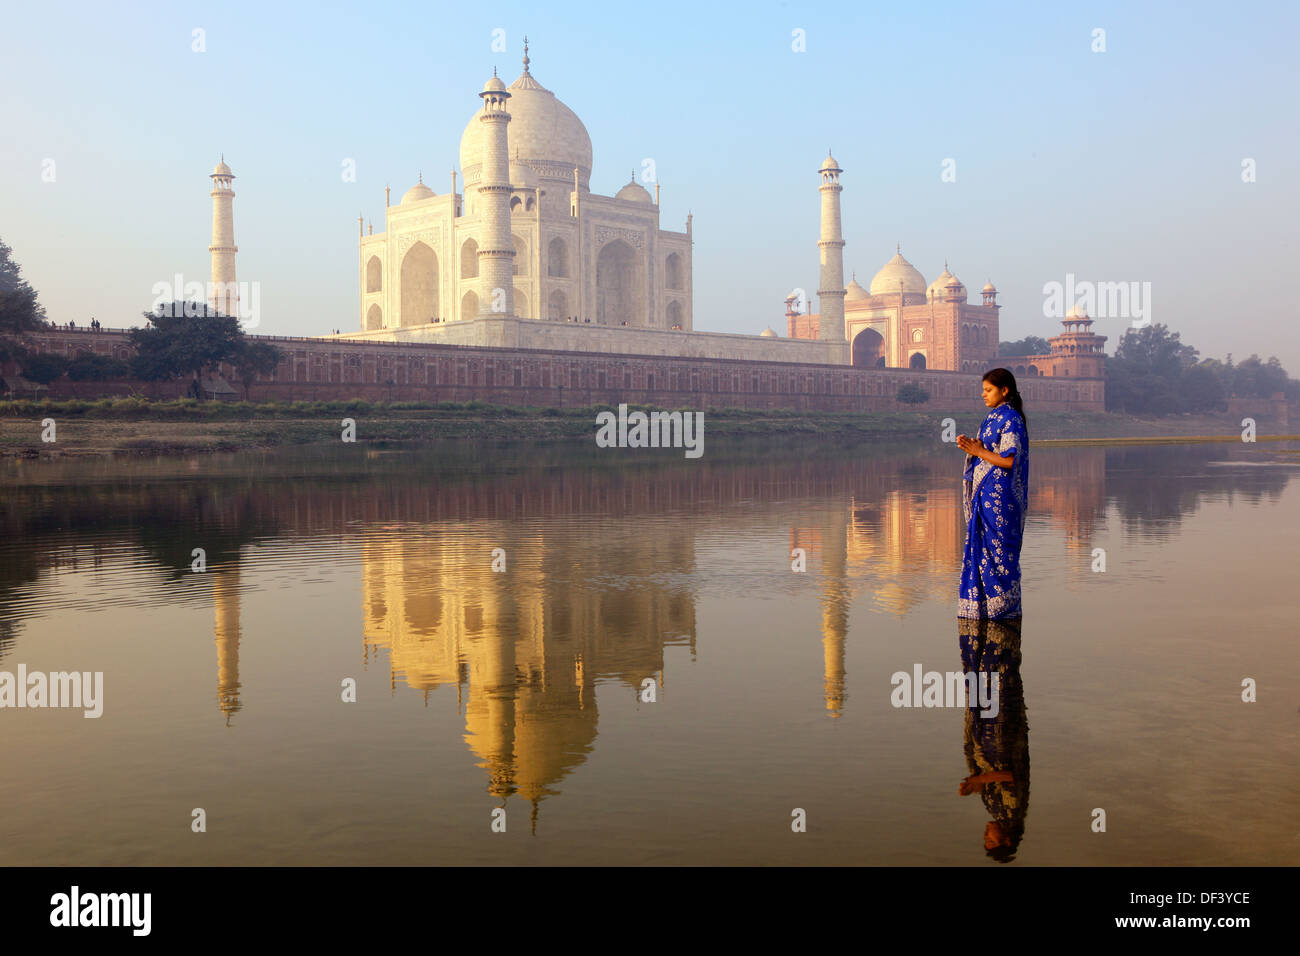 India, Uttar Pradesh, Agra, Woman wearing blue sari standing next to the Taj Mahal Stock Photo